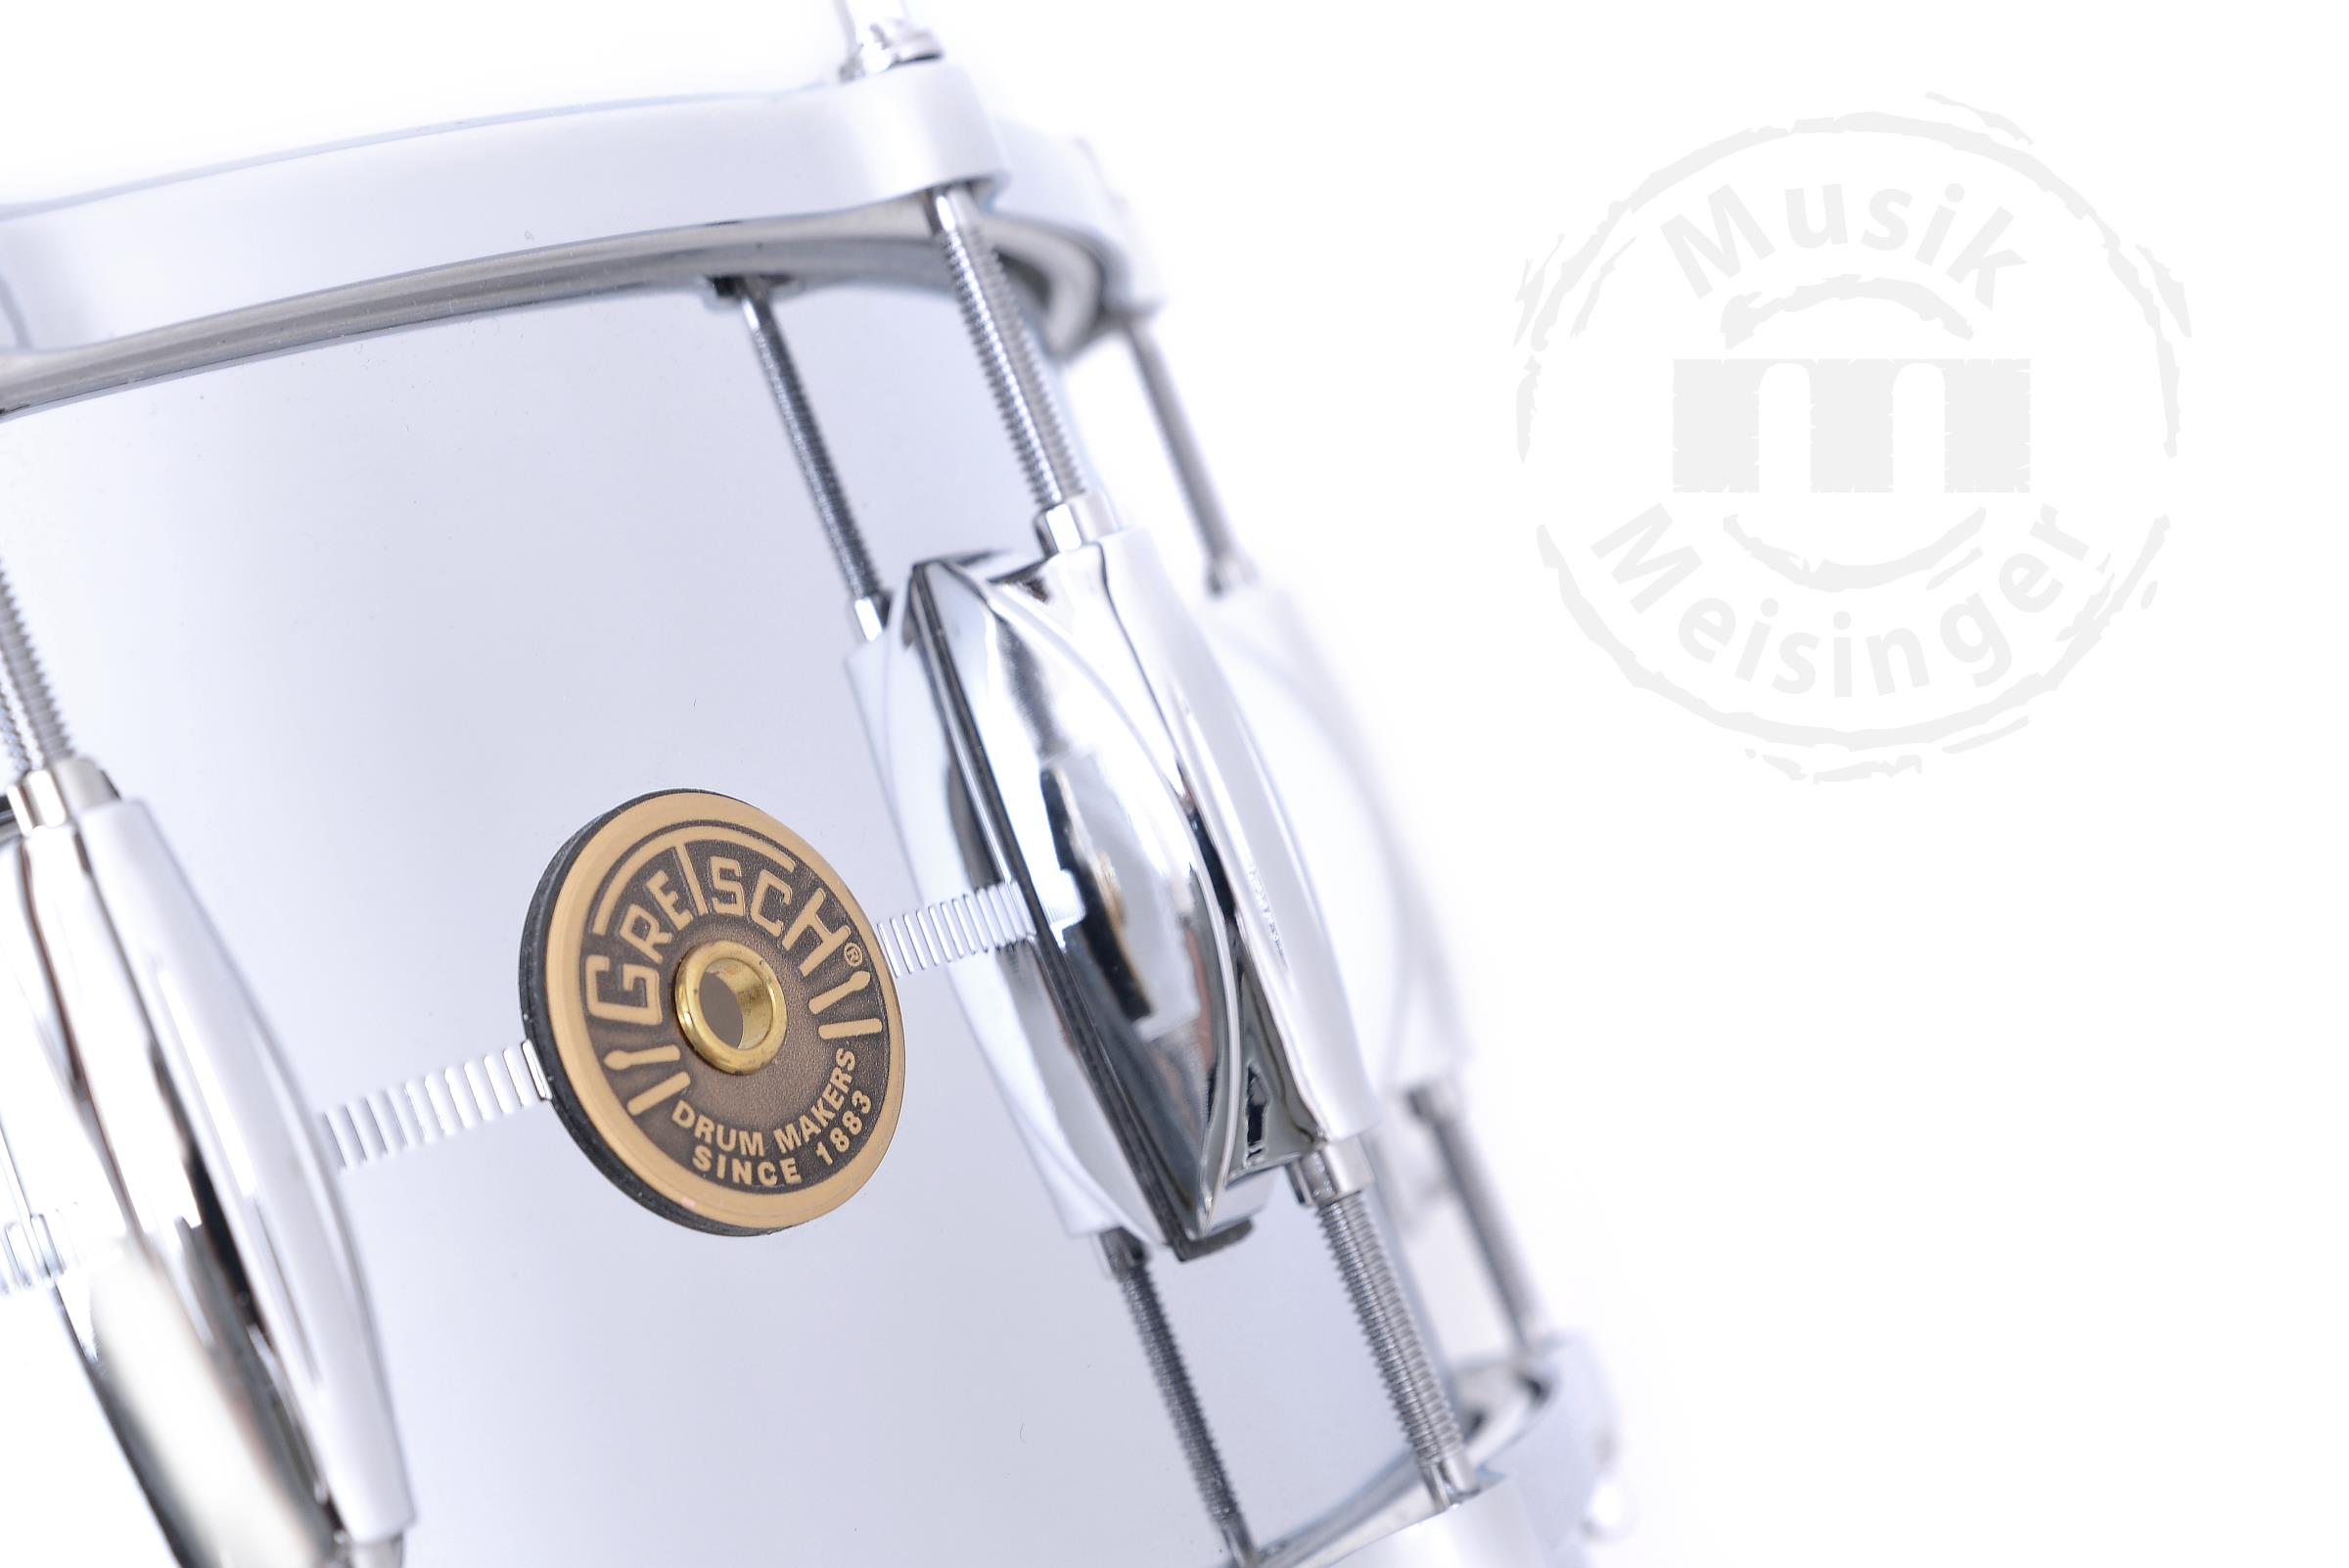 Gretsch Drums 14x6,5" Snare Chrome over Brass